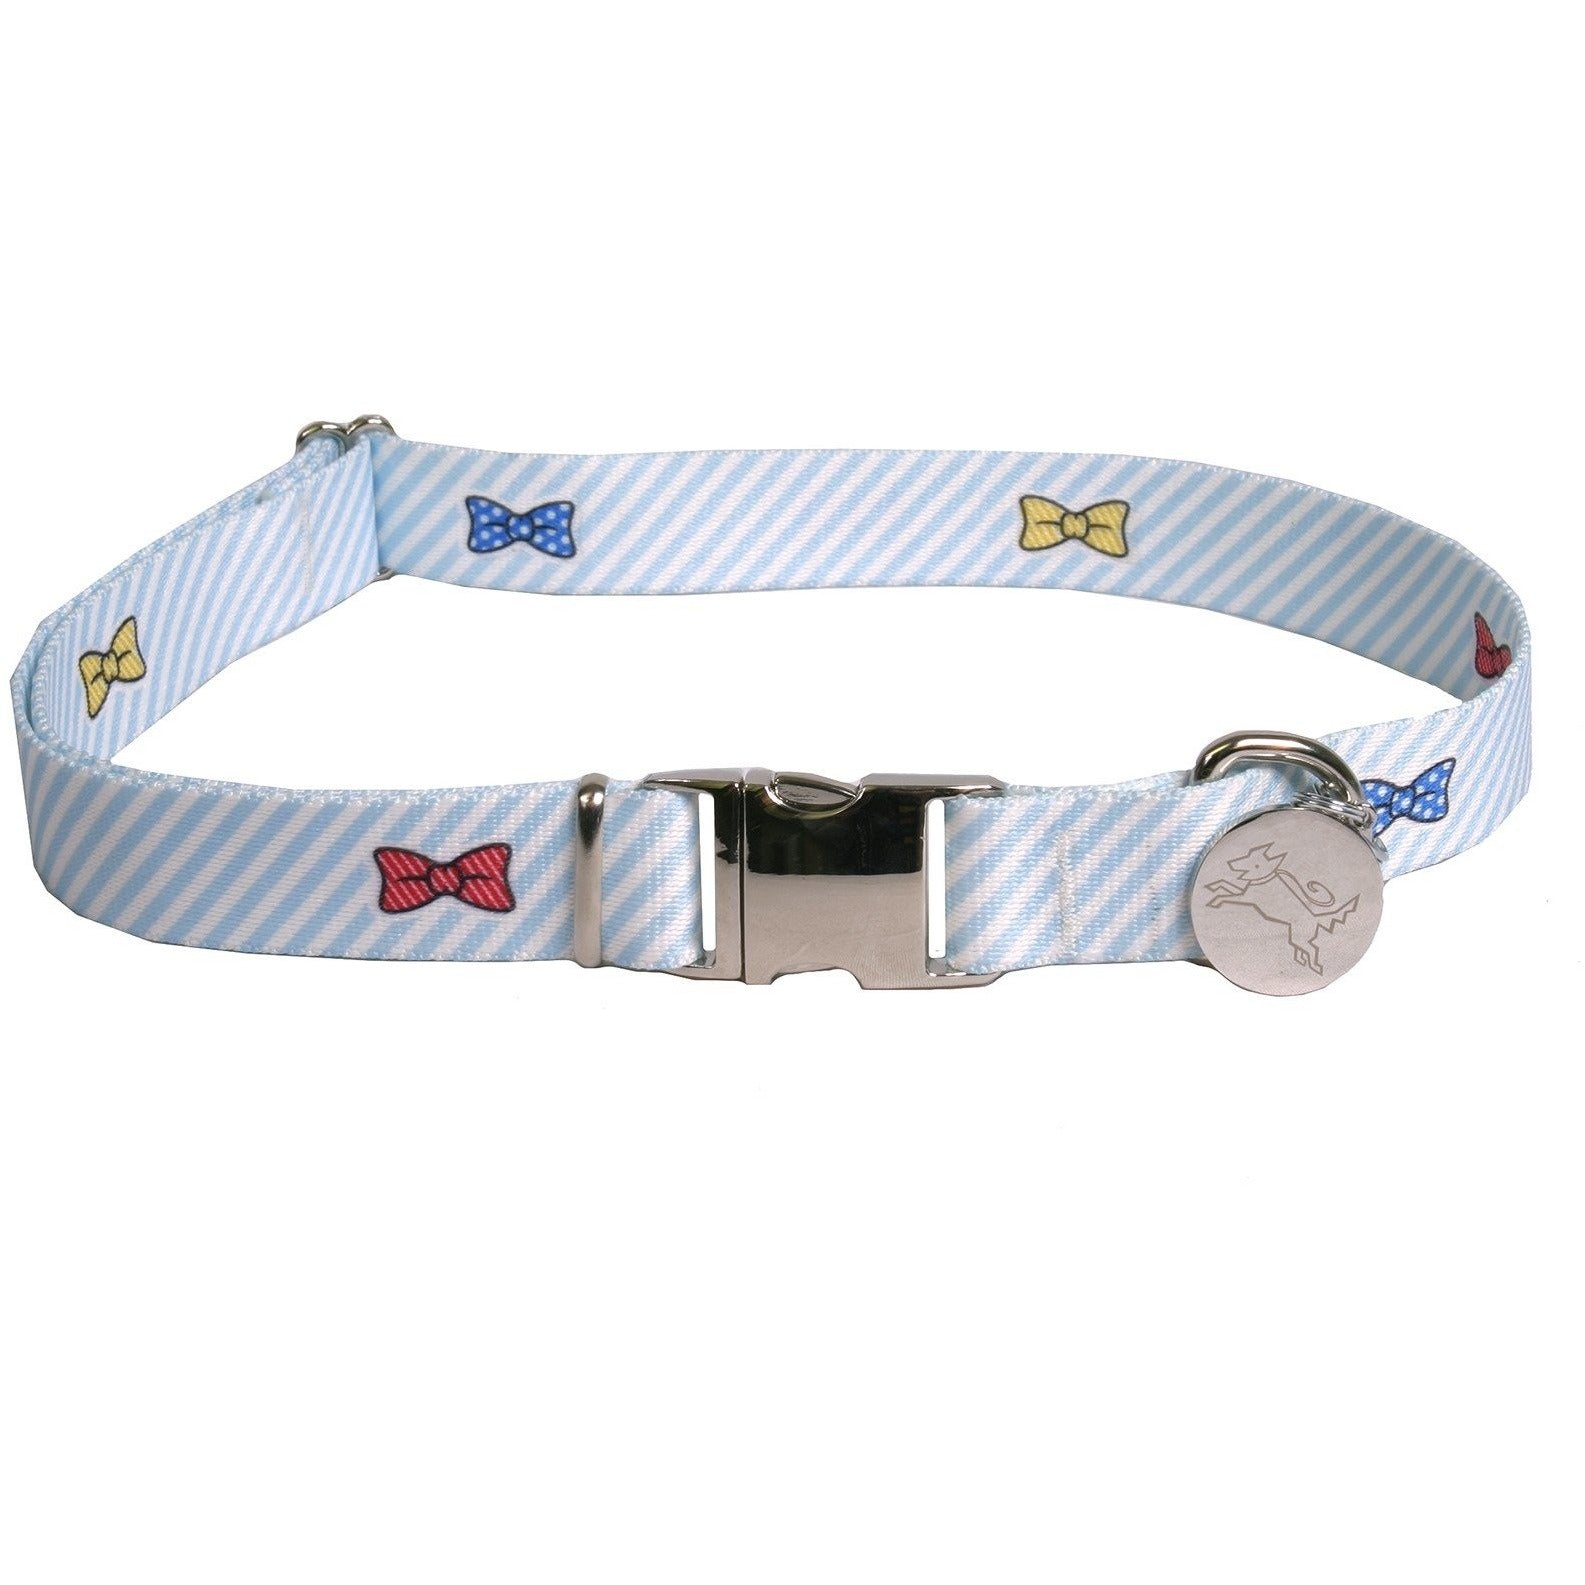 Yellow Dog Design - Seersucker Blue with Bow Ties Collar